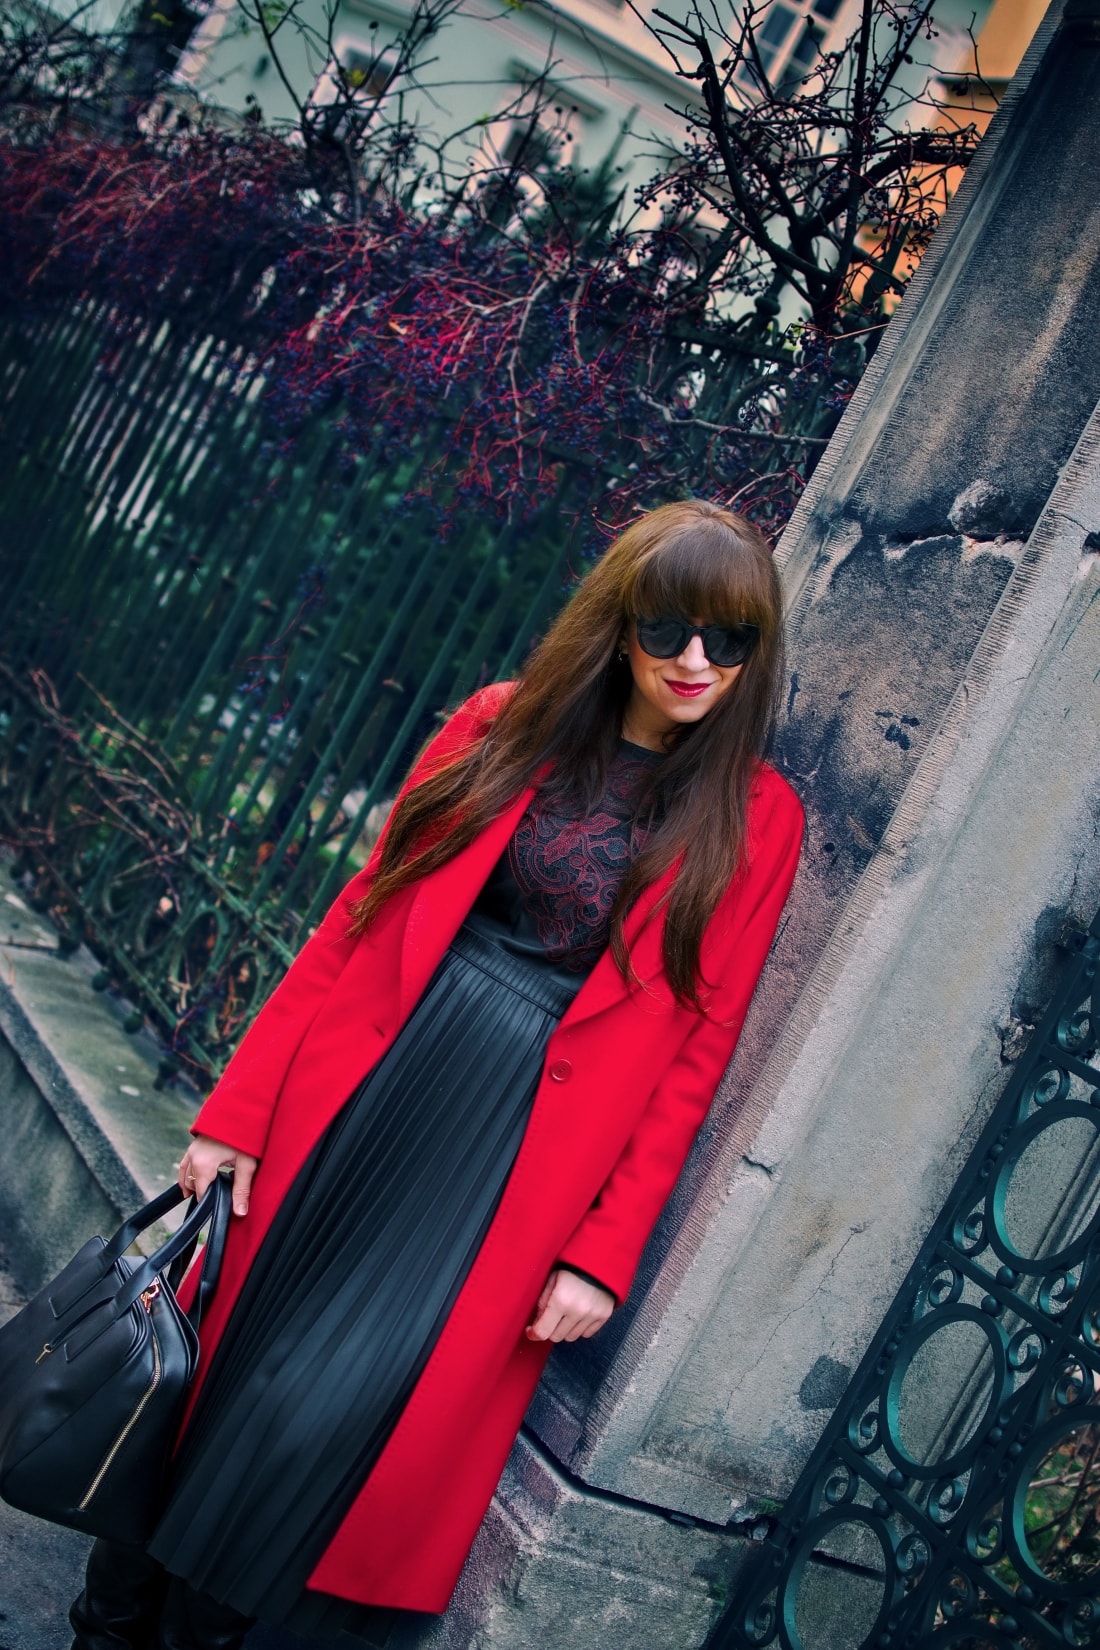 Čierne plisované šaty_Katharine-fashion is beautiful_blog 5_Červený kabát Zara_Kabelka Parfois_Katarína Jakubčová_Fashion blogger